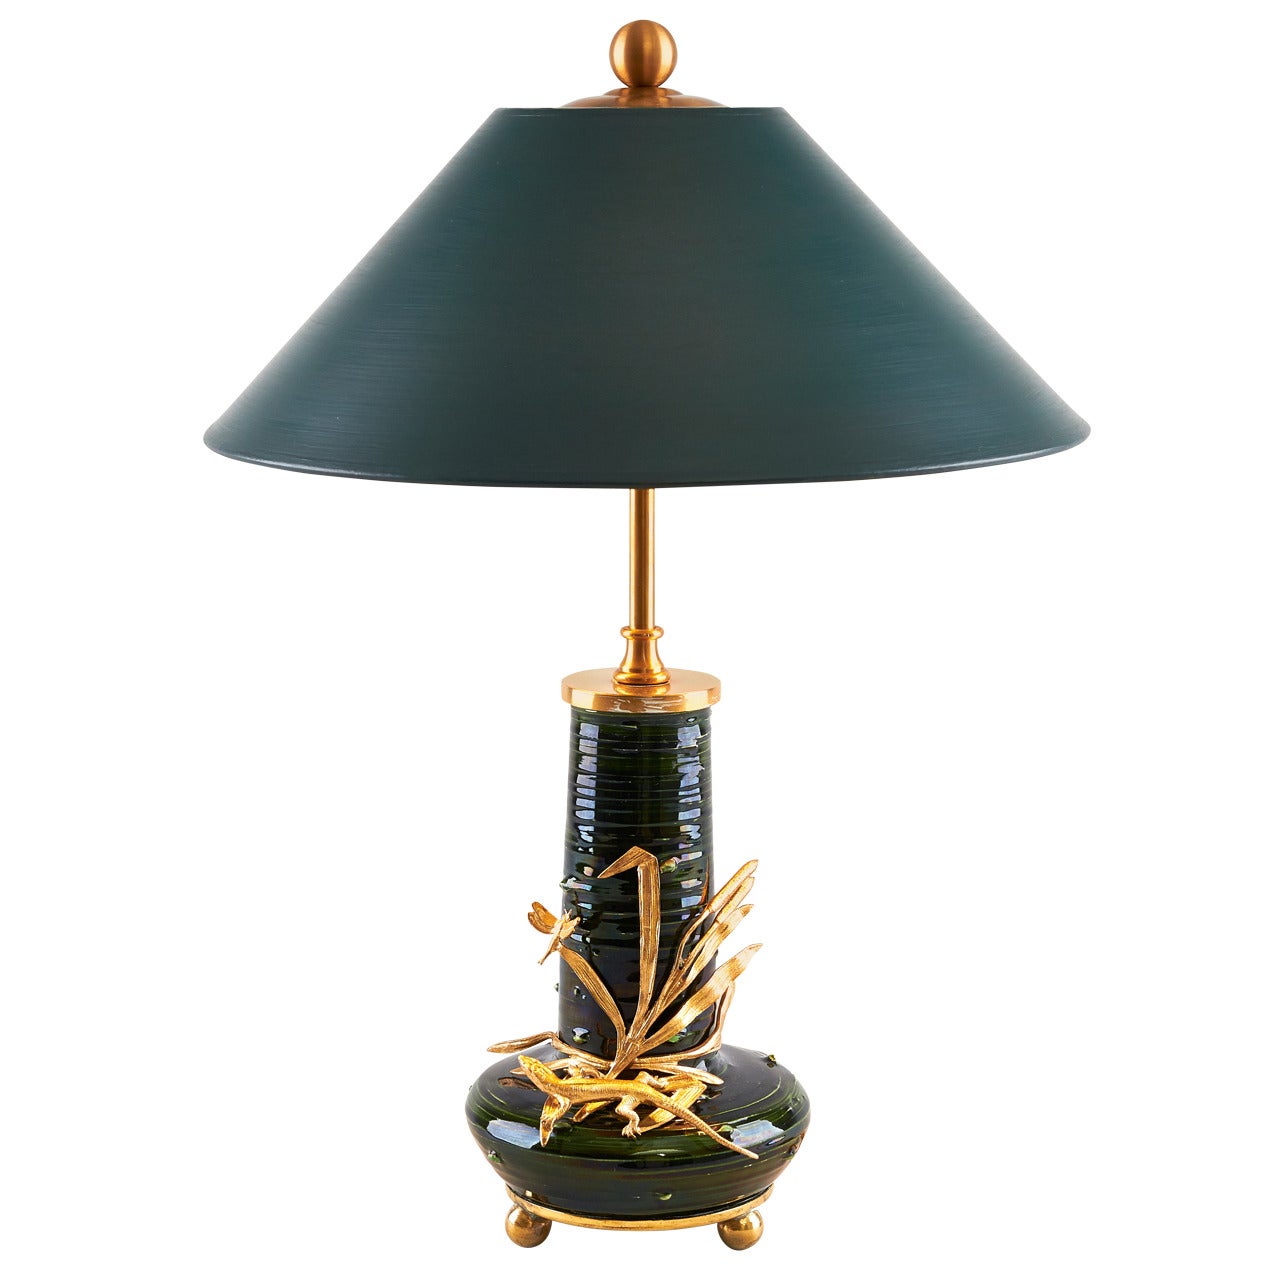 Art Nouveau Vase Mounted as a Table Lamp